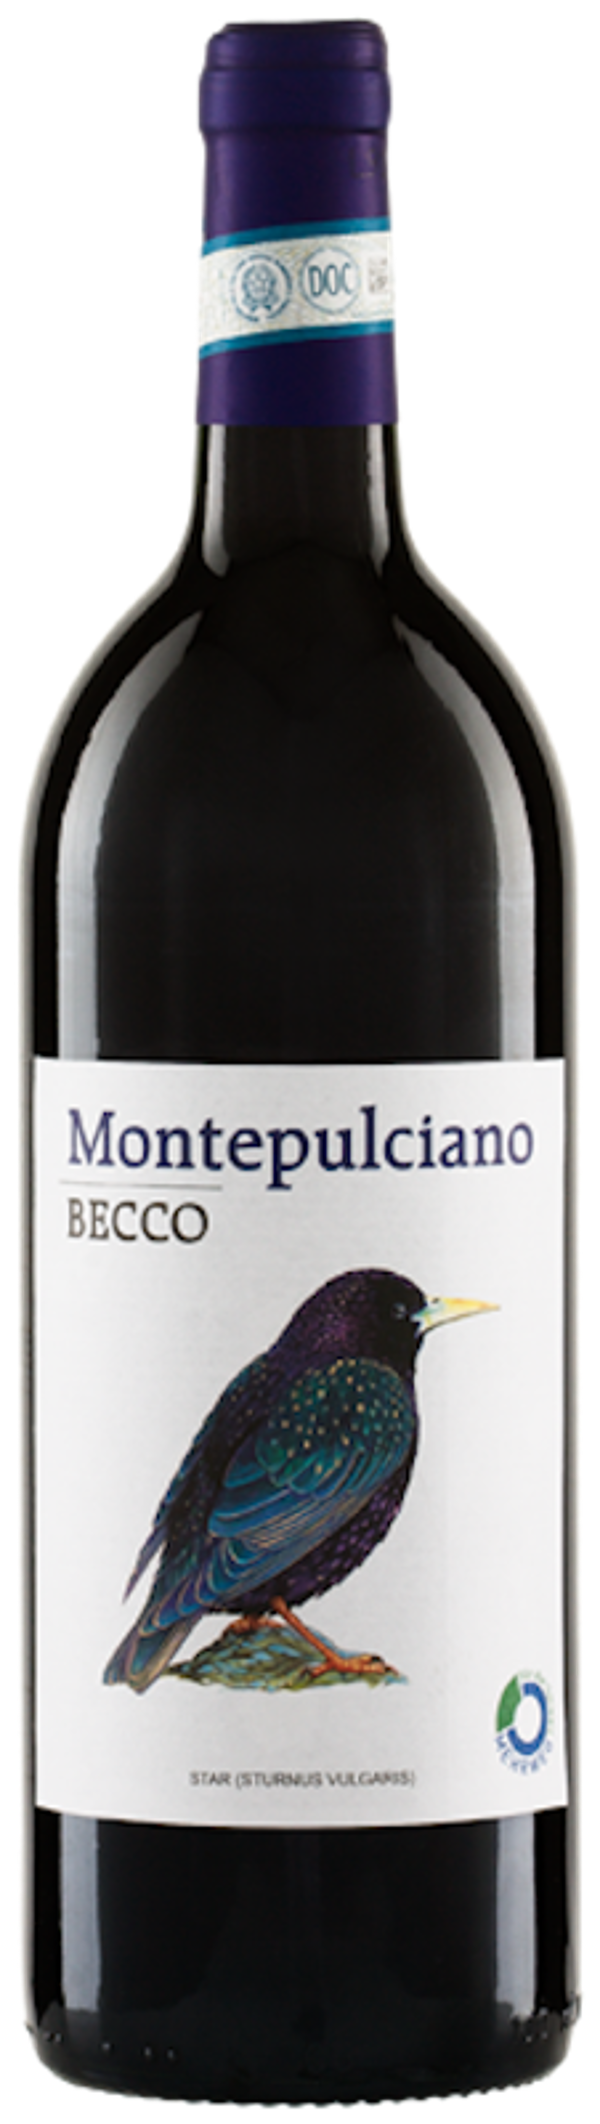 Produktfoto zu VPE Montepulciano Becco rot 6x1l Riegel Bioweine